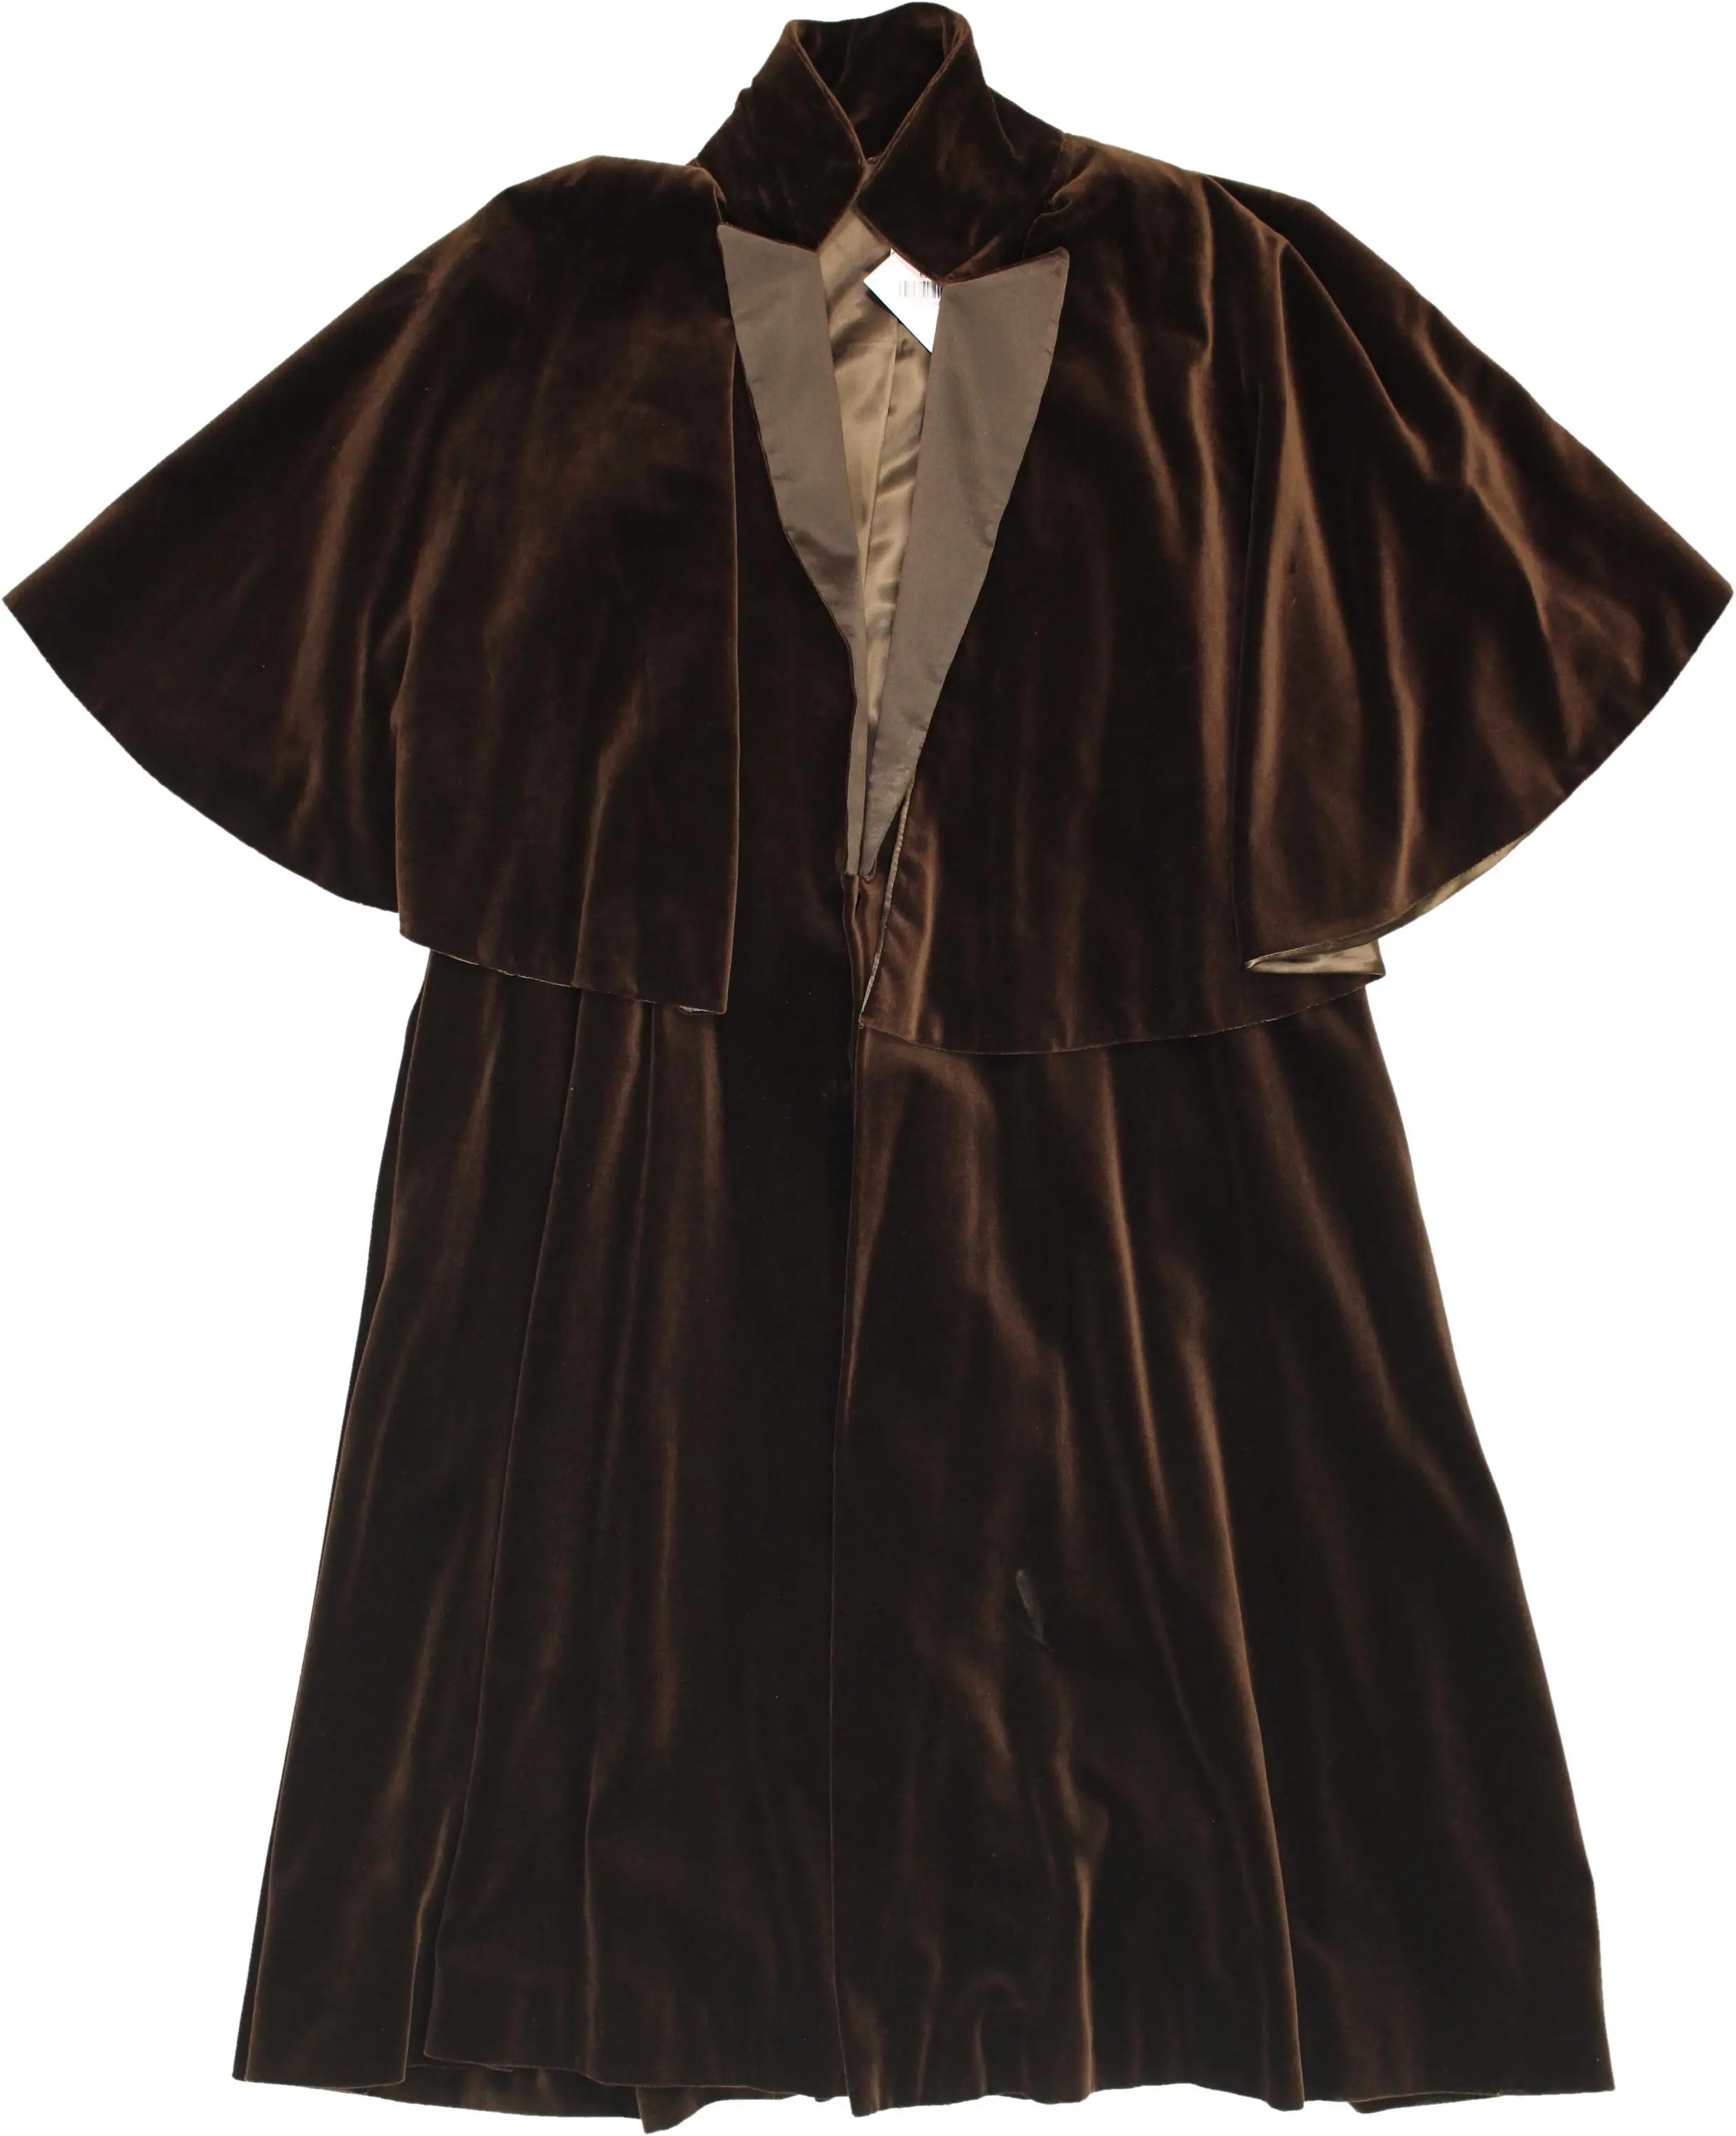 Handmade - Handmade Velvet Cape Vest- ThriftTale.com - Vintage and second handclothing